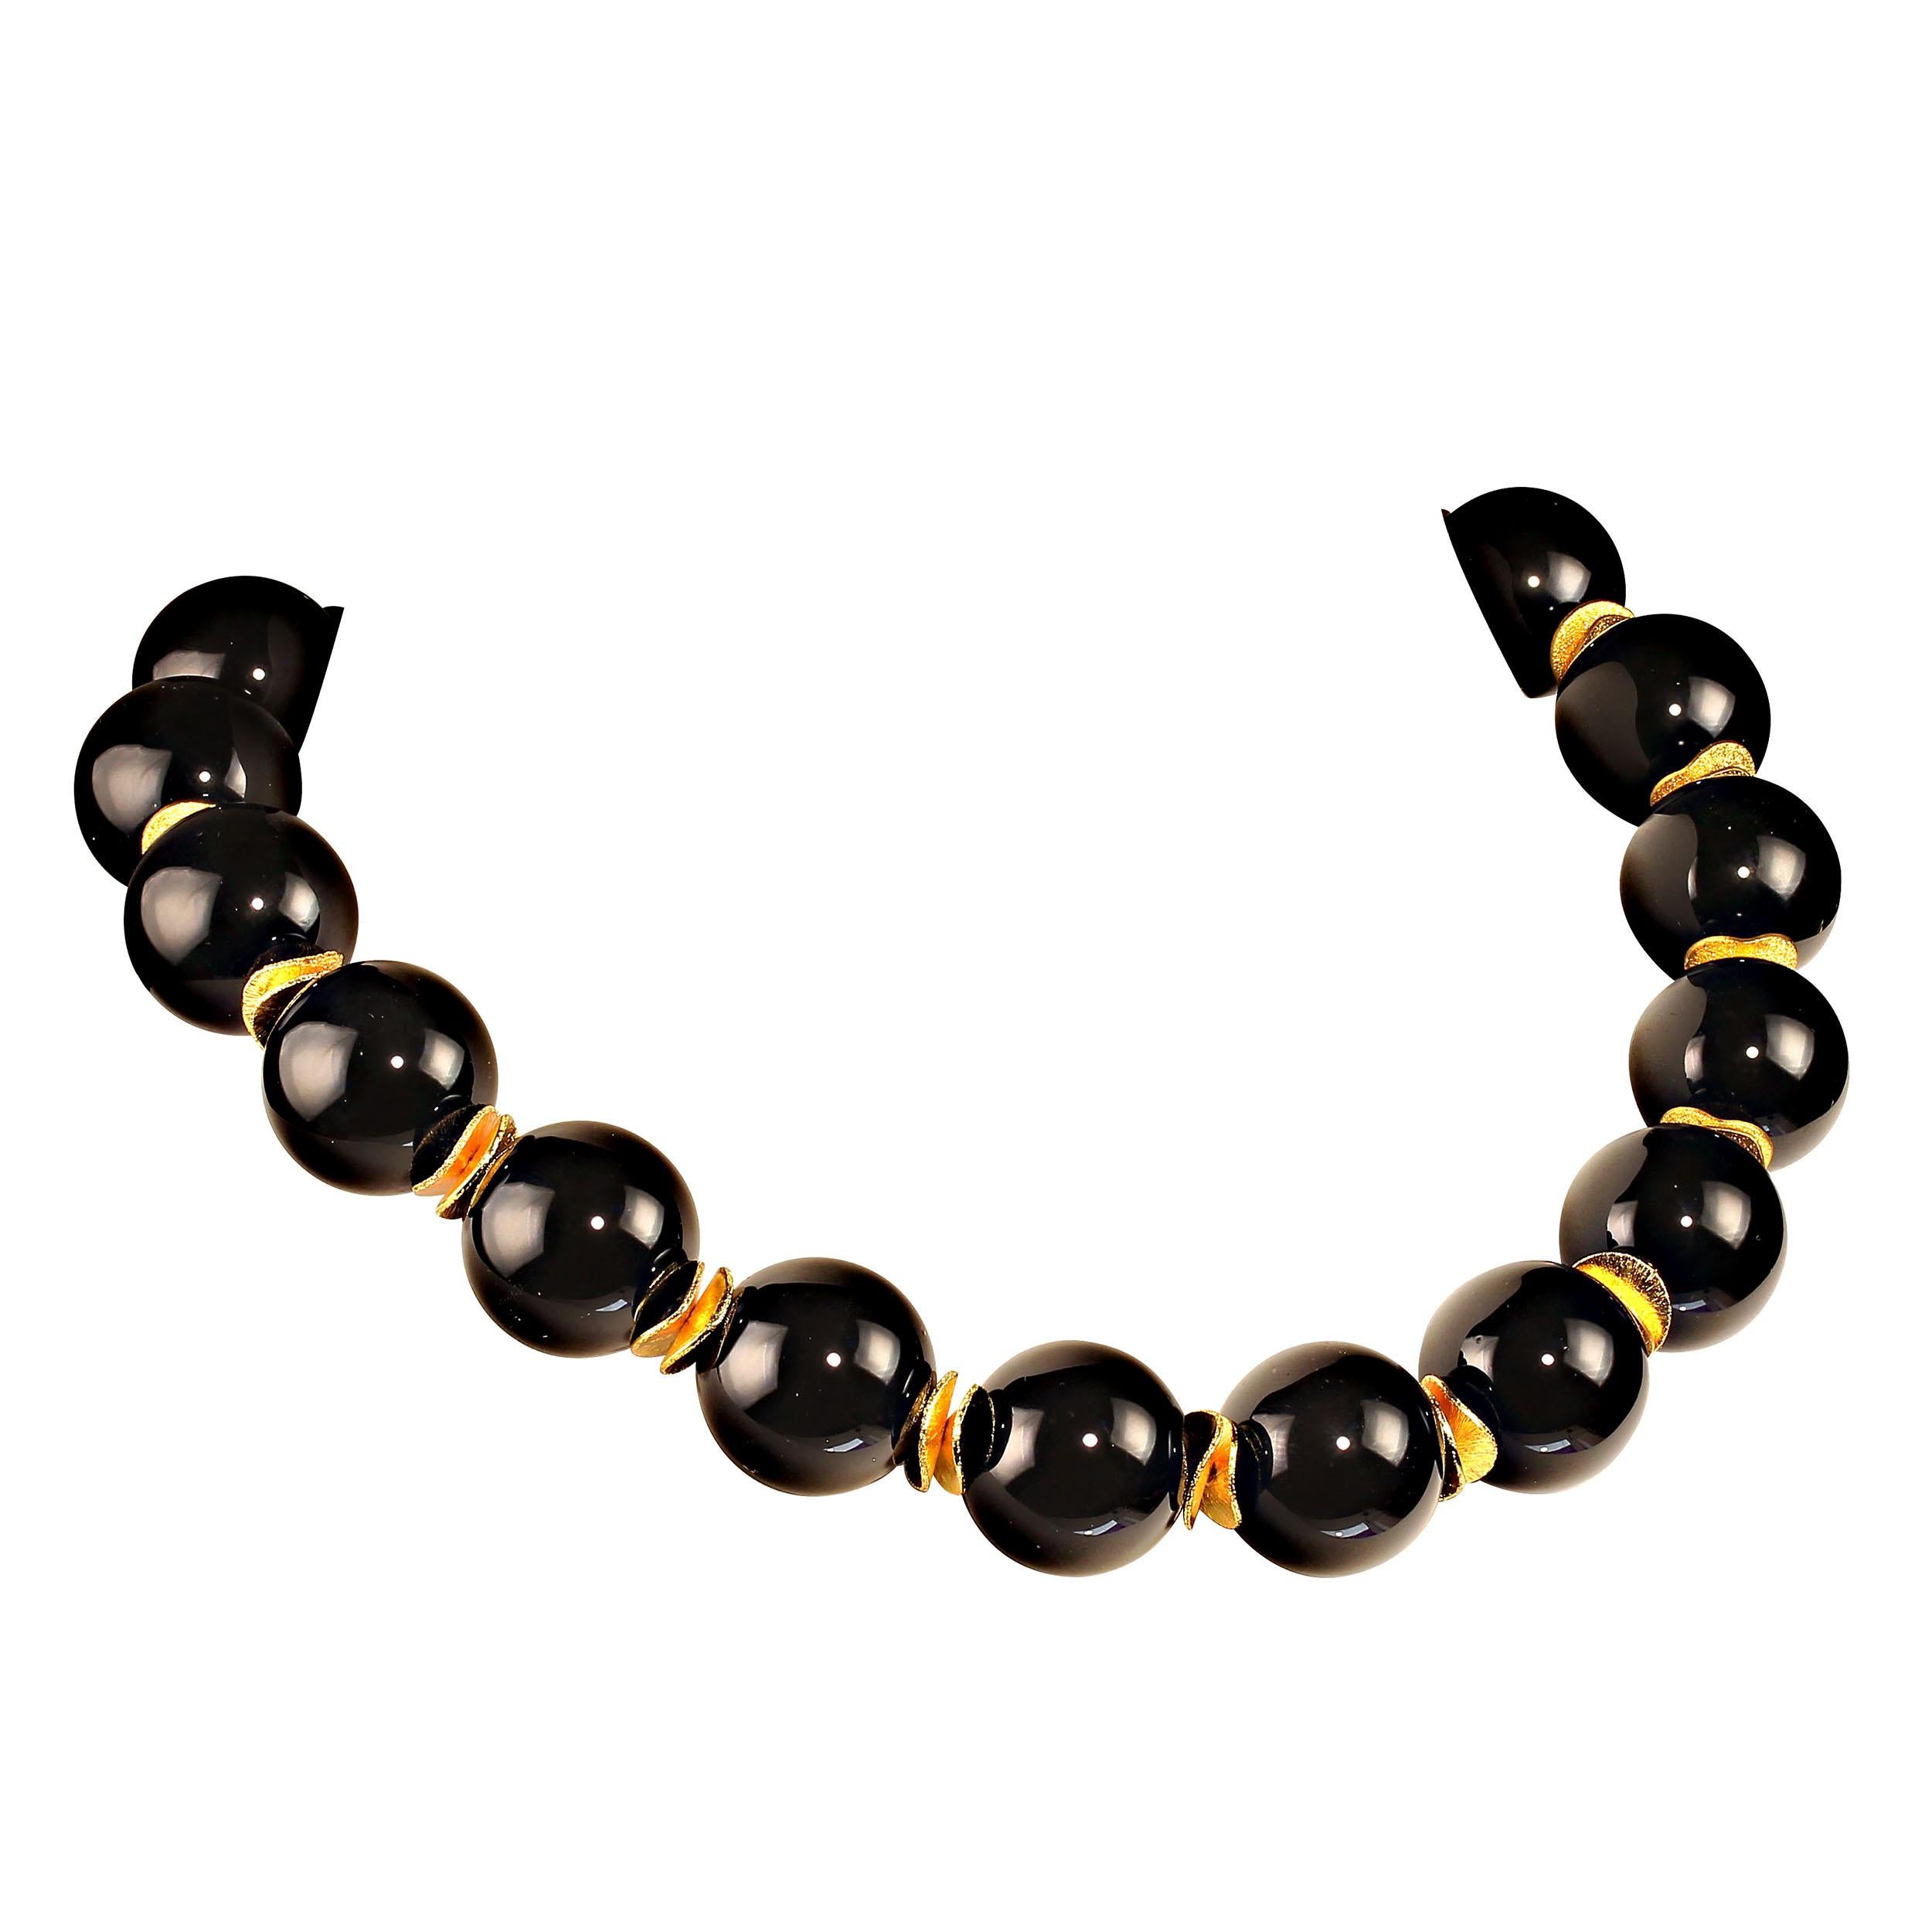 Artisan AJD Elegant 17 Inch Black Onyx Choker Necklace    Gift Idea!